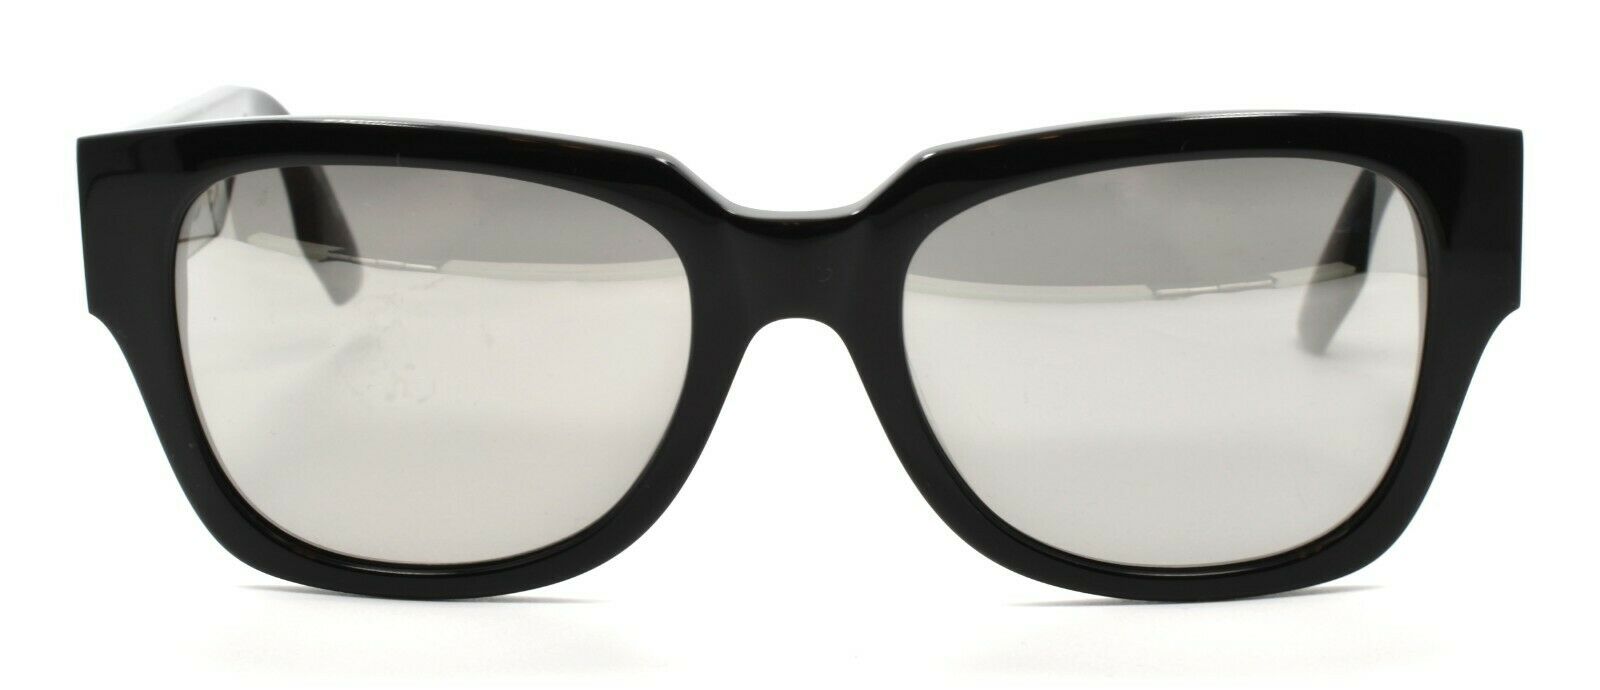 2-McQ Alexander McQueen MQ0020S 002 Women's Sunglasses Black / Mirrored-889652010441-IKSpecs